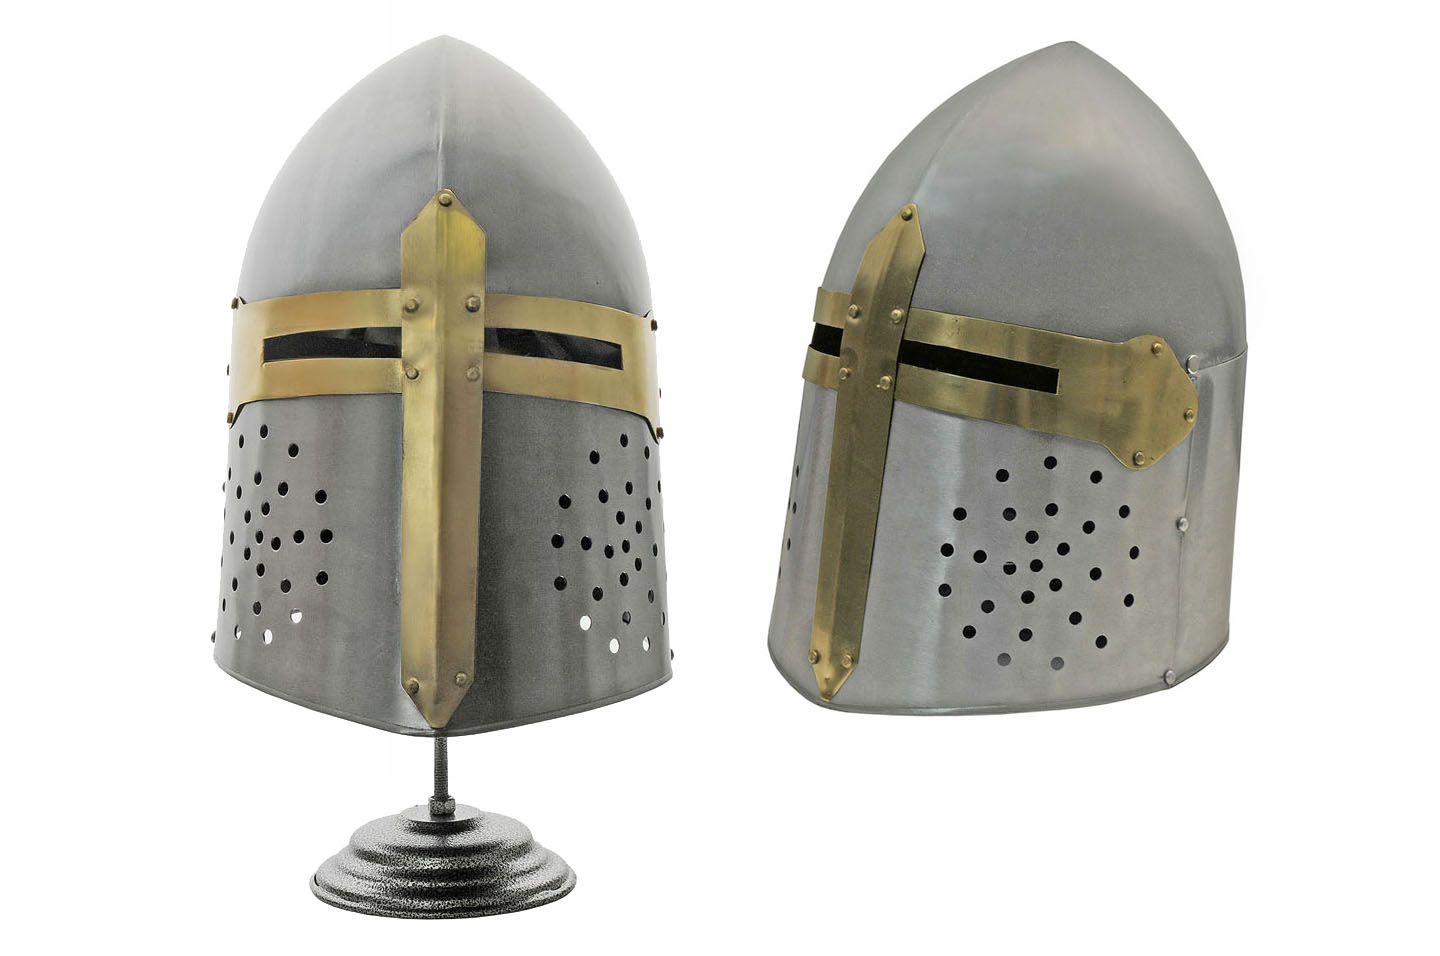 Details about   Medieval Knights Barbuta Helmet Templar Crusader Armor Barbute Visor Helmet 